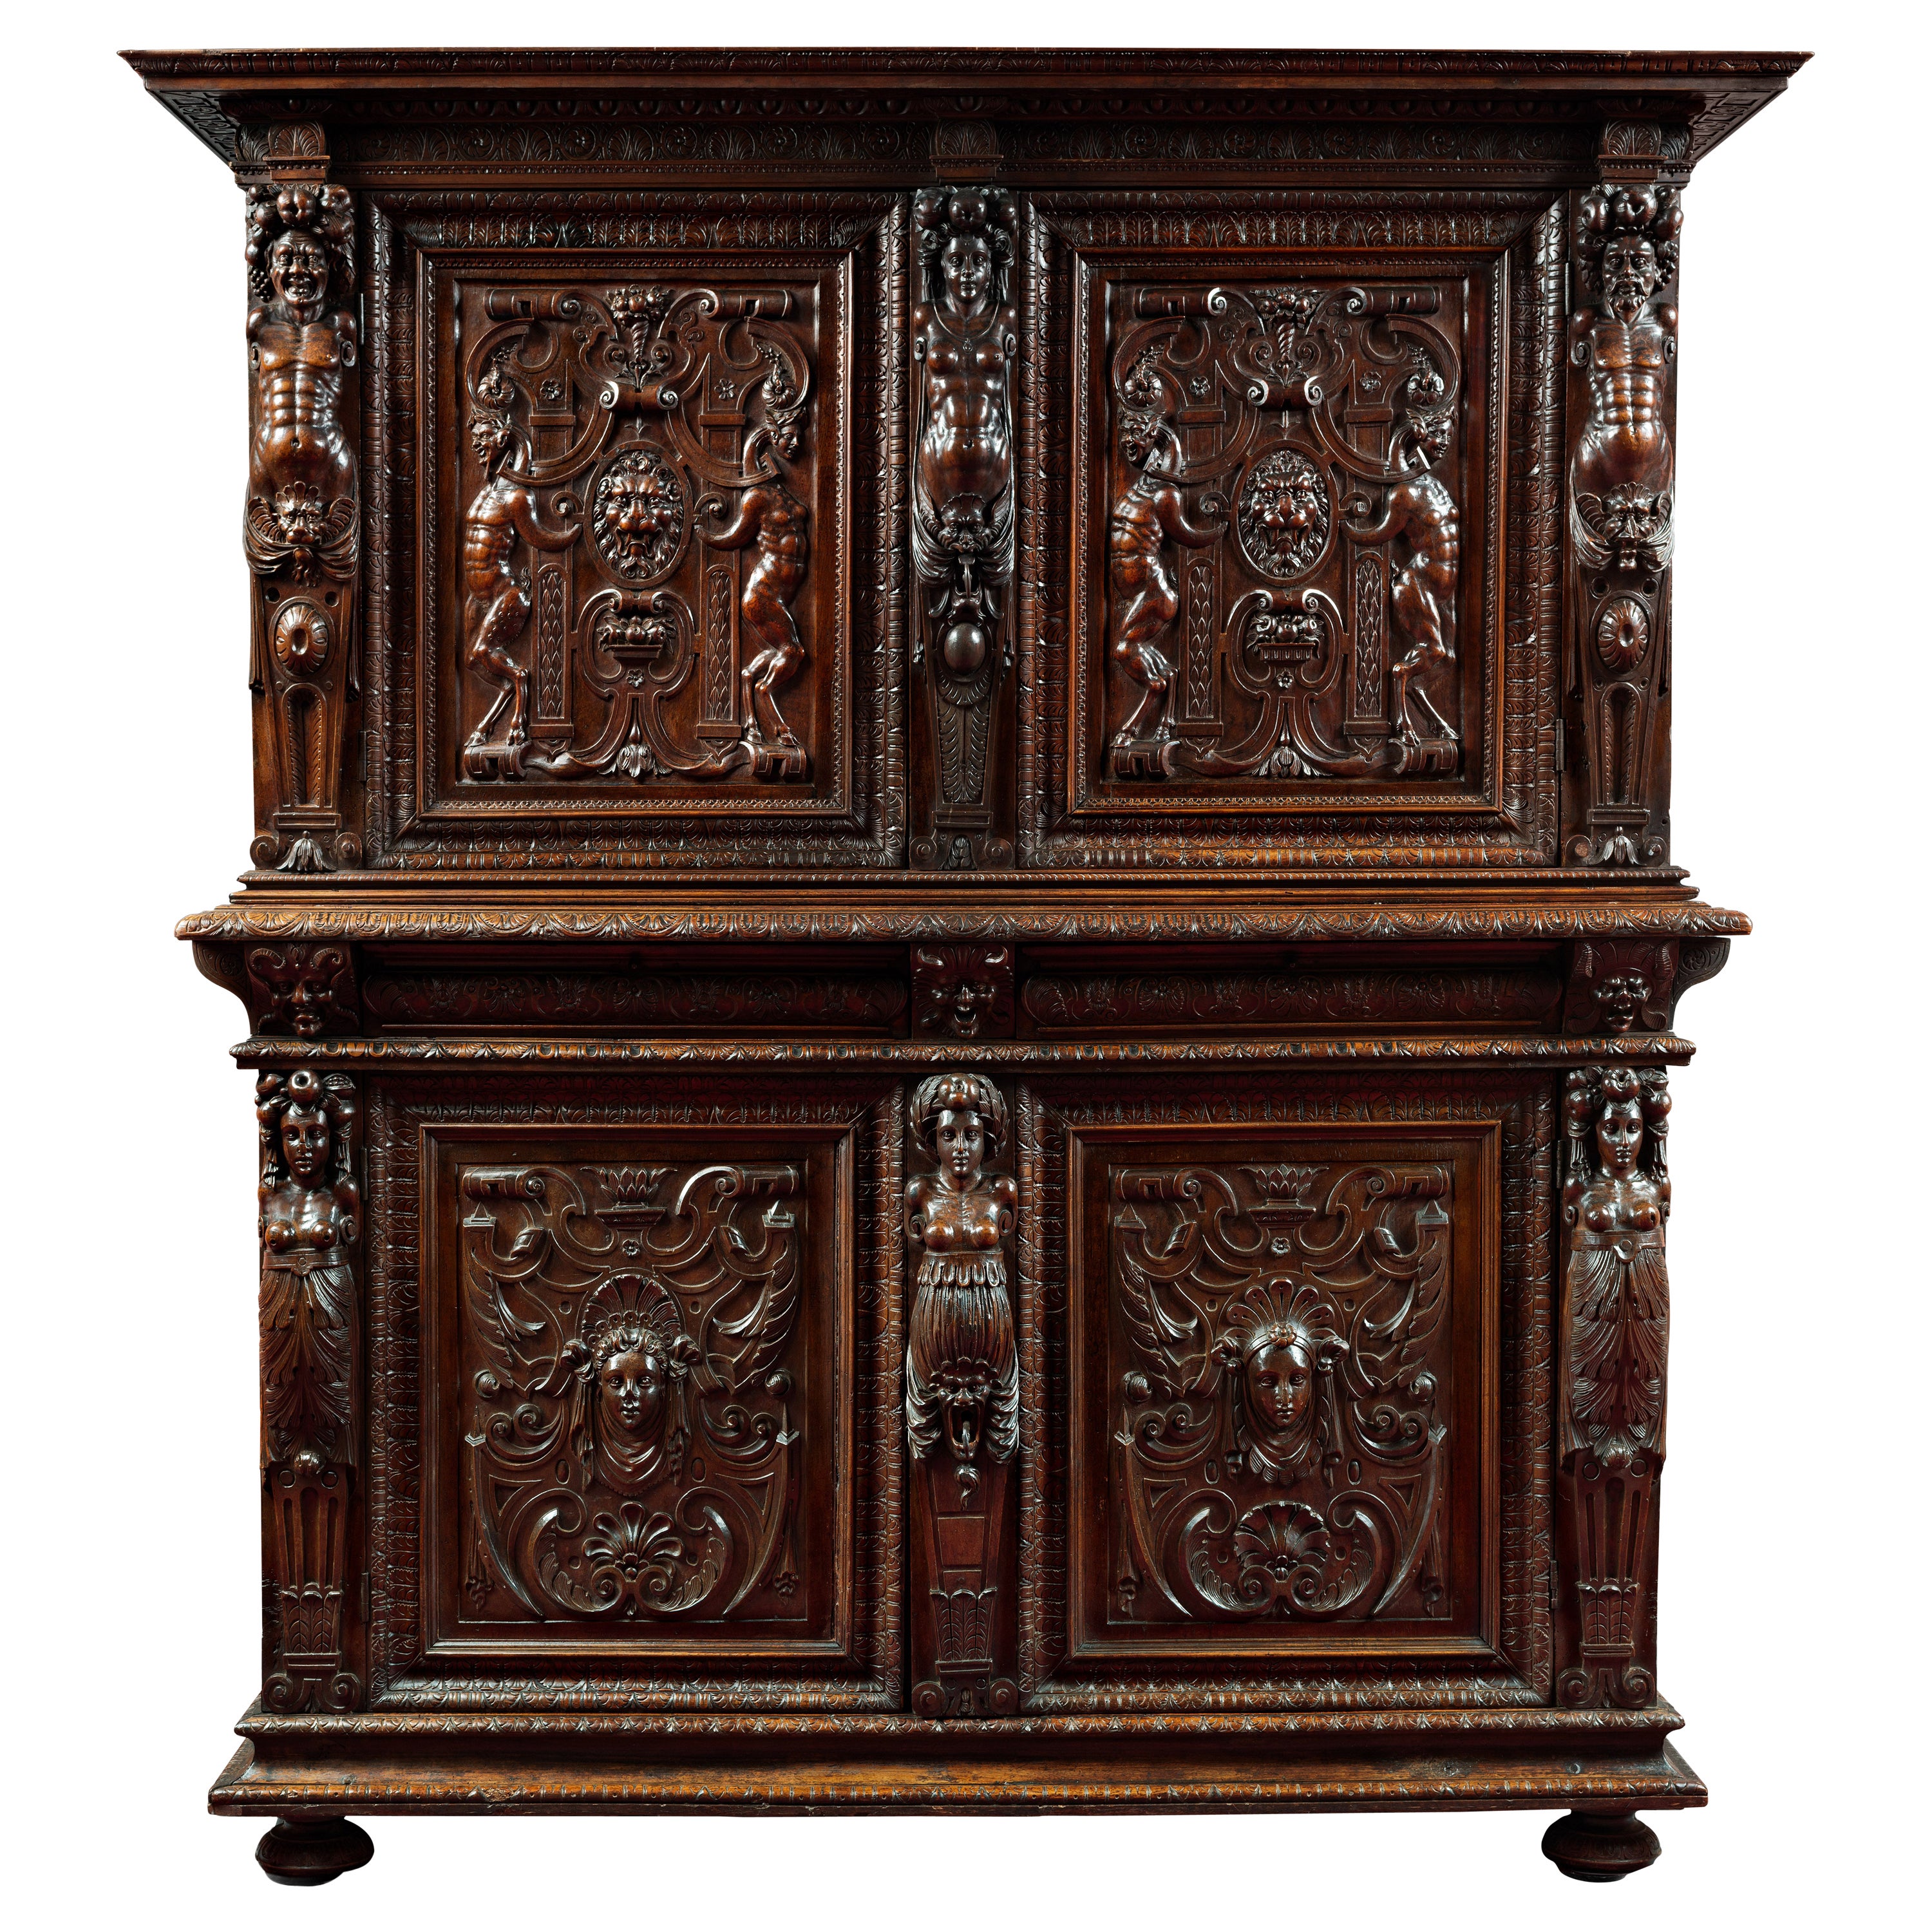 Renaissance Cabinet from Burgundy or Lyon Region